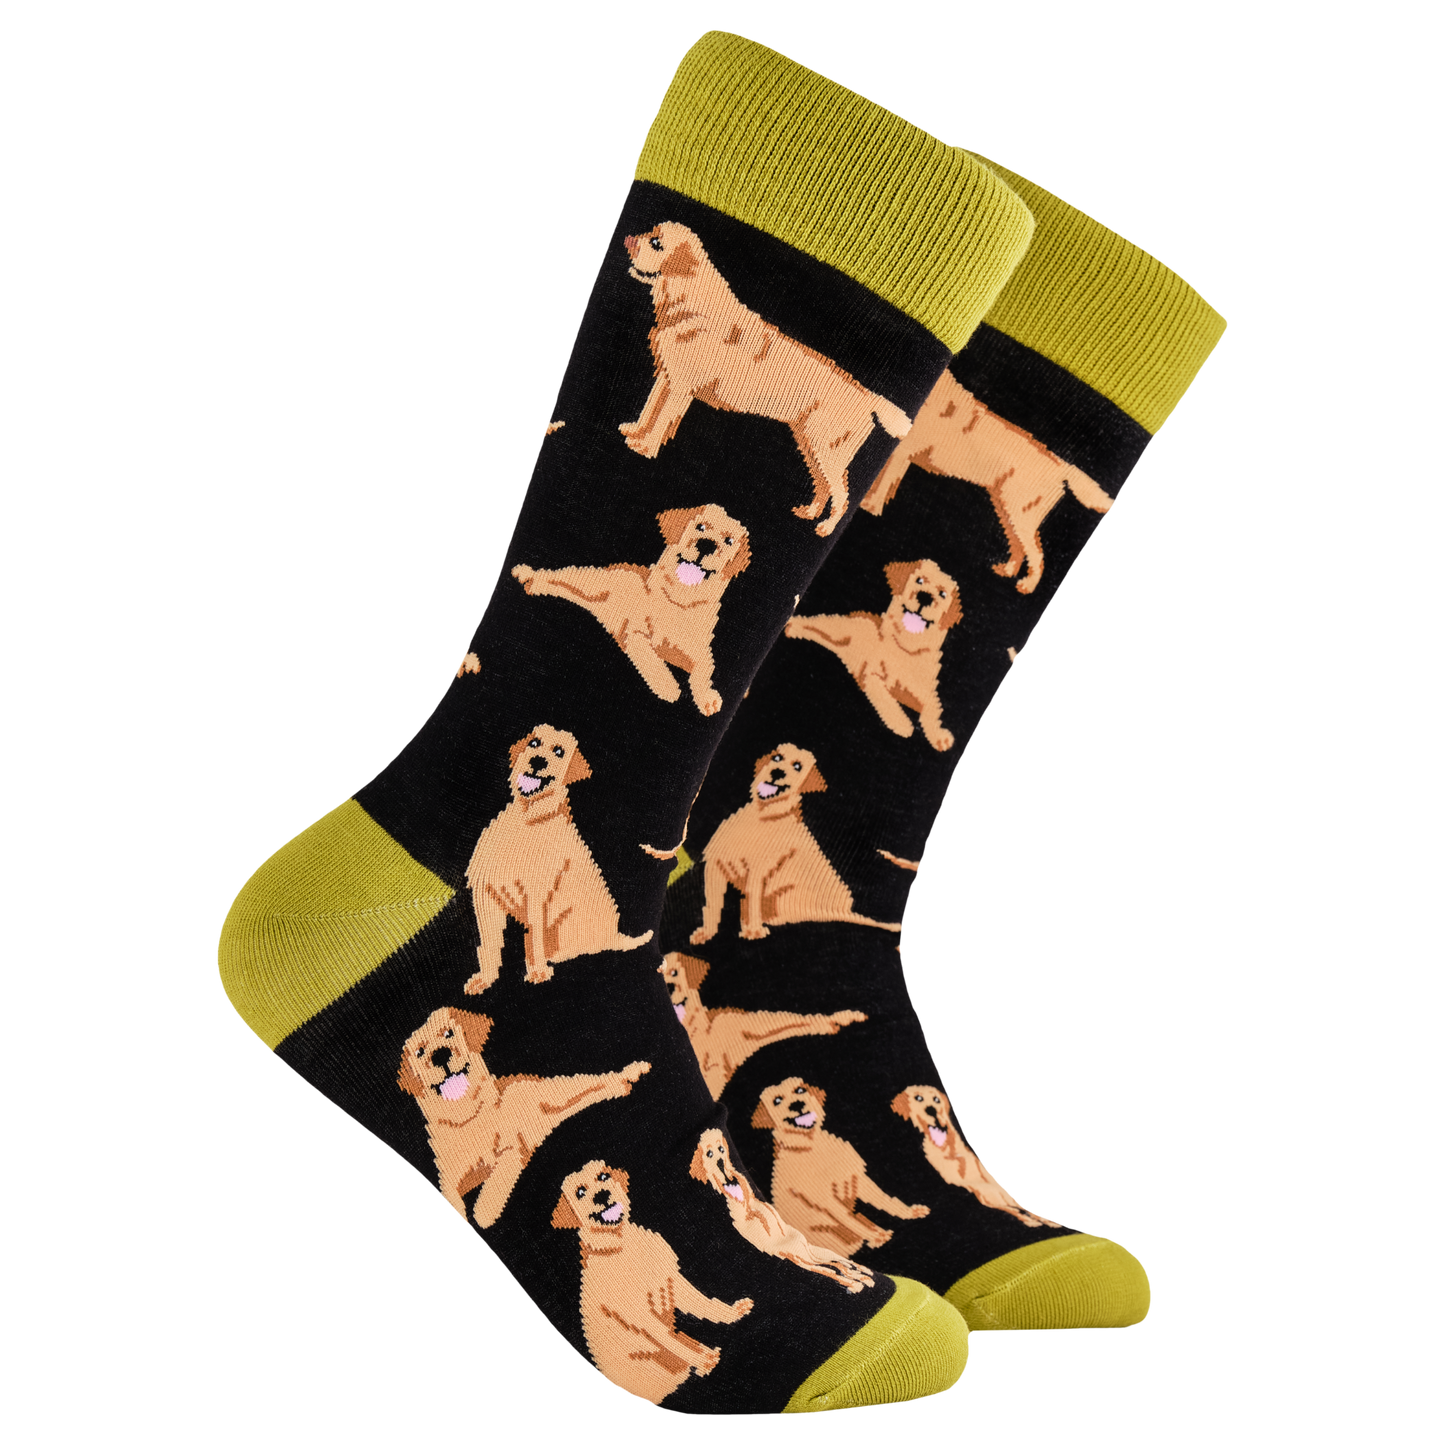 Labrador Retriever Socks - Labradorable. A pair of socks depicting Labrador dogs. Black legs, mustard cuff, heel and toe.